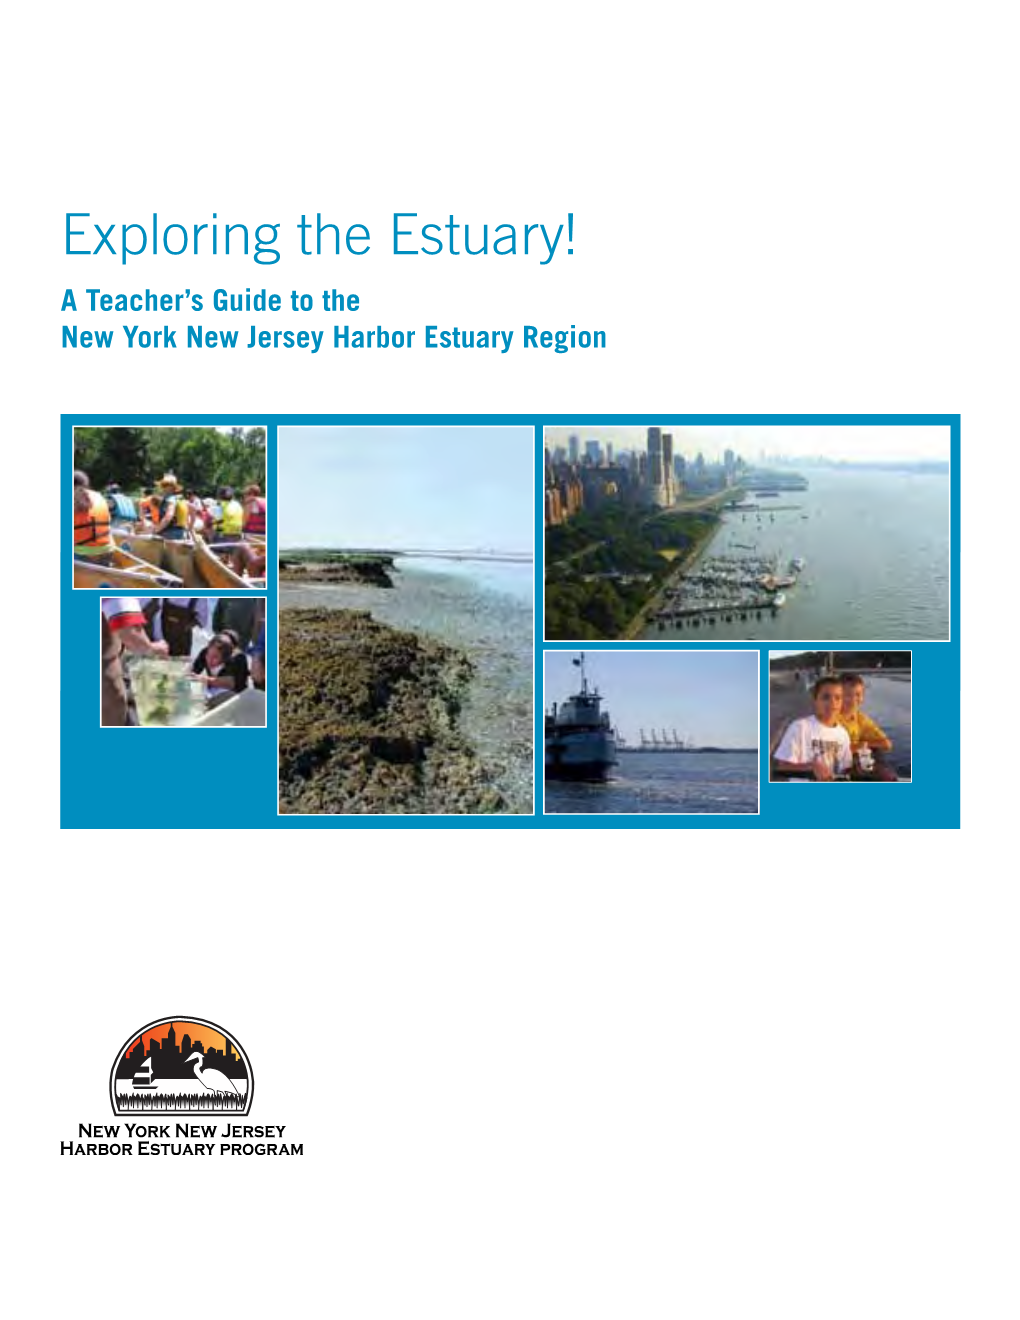 Exploring the Estuary! a Teacher's Guide